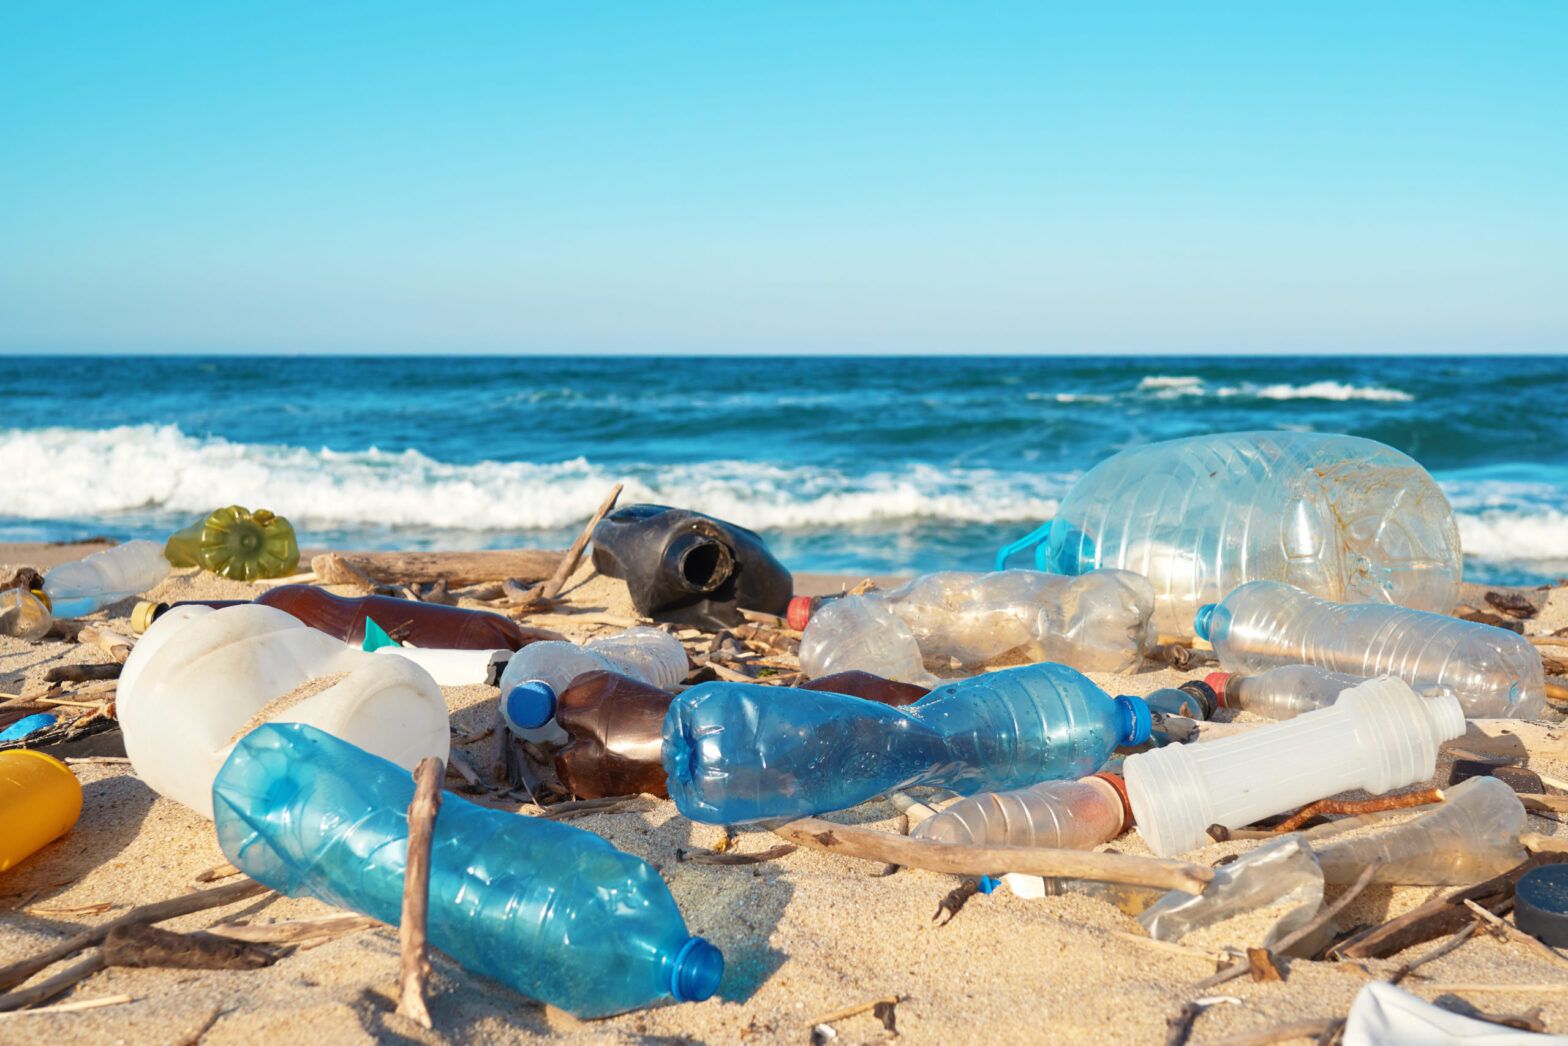 $10trn investor coalition piles pressure on companies to address plastic crisis